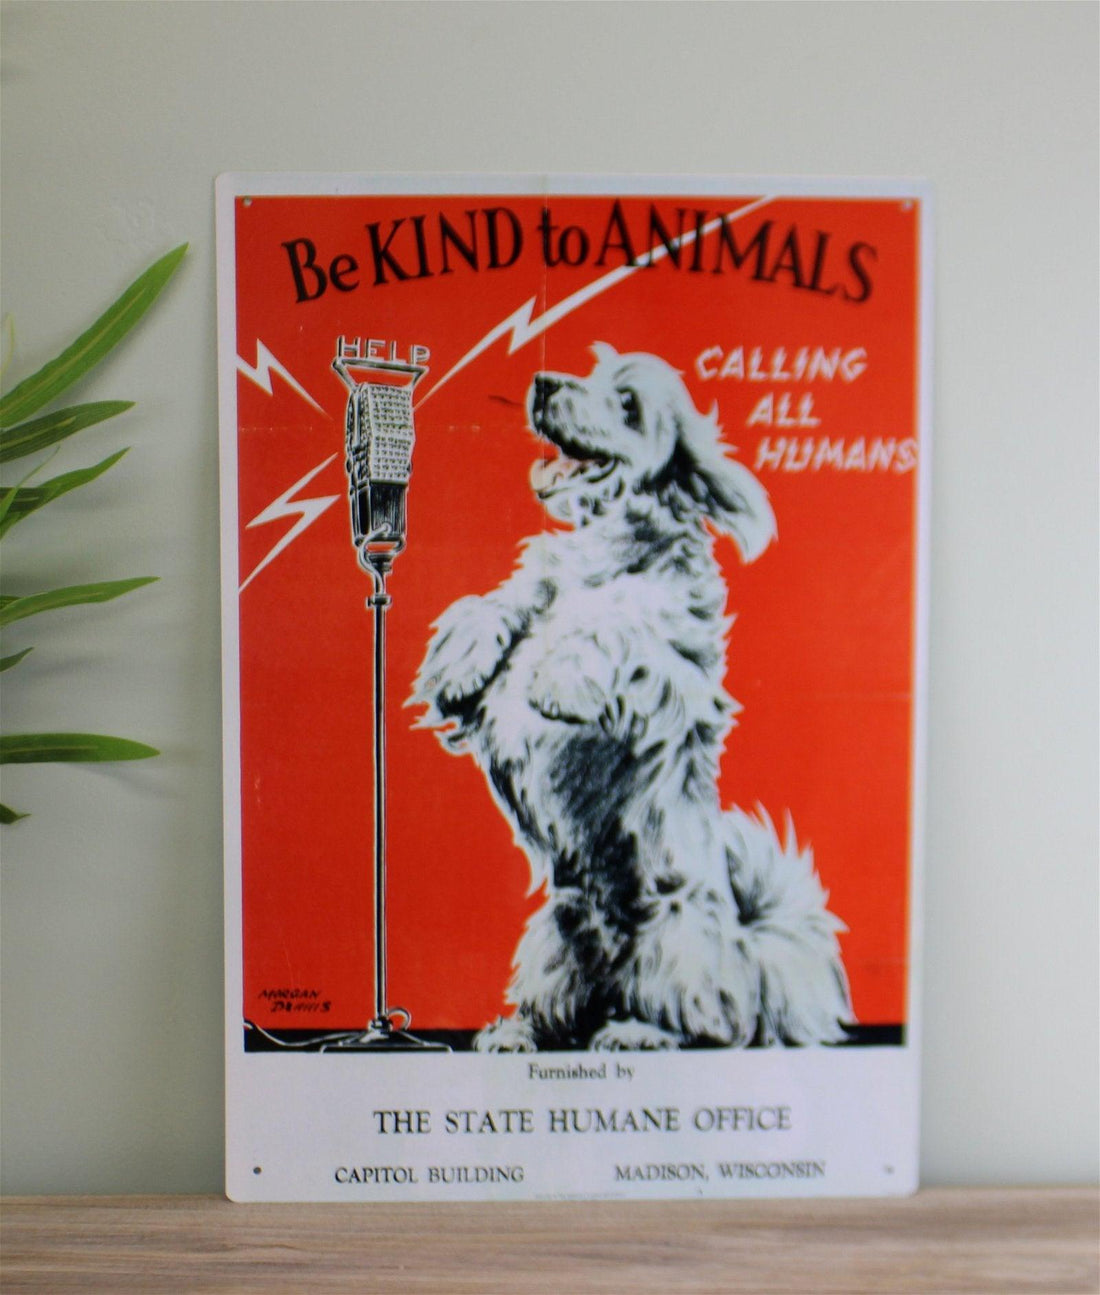 Vintage Metal Sign - Retro Advertising - Be Kind To Animals - £27.99 - Retro Advertising 